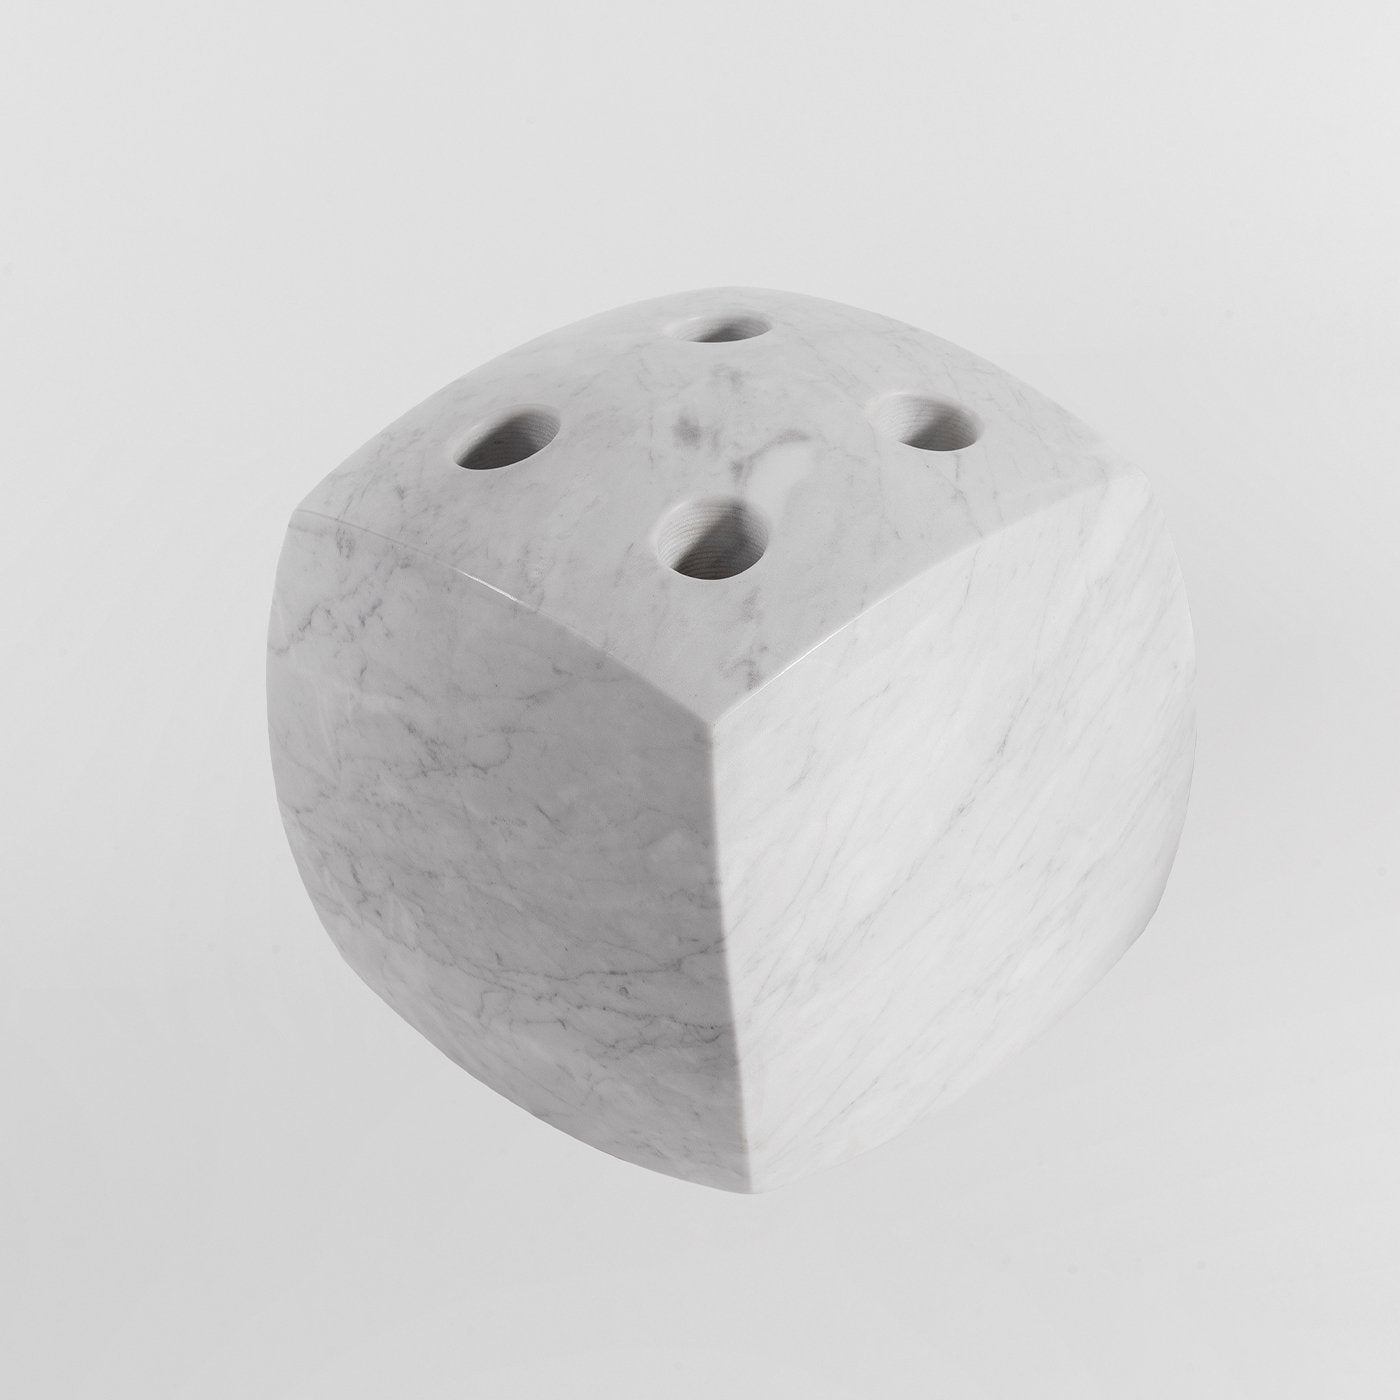 White Cue Rack by Adriano Design - Alternative view 1